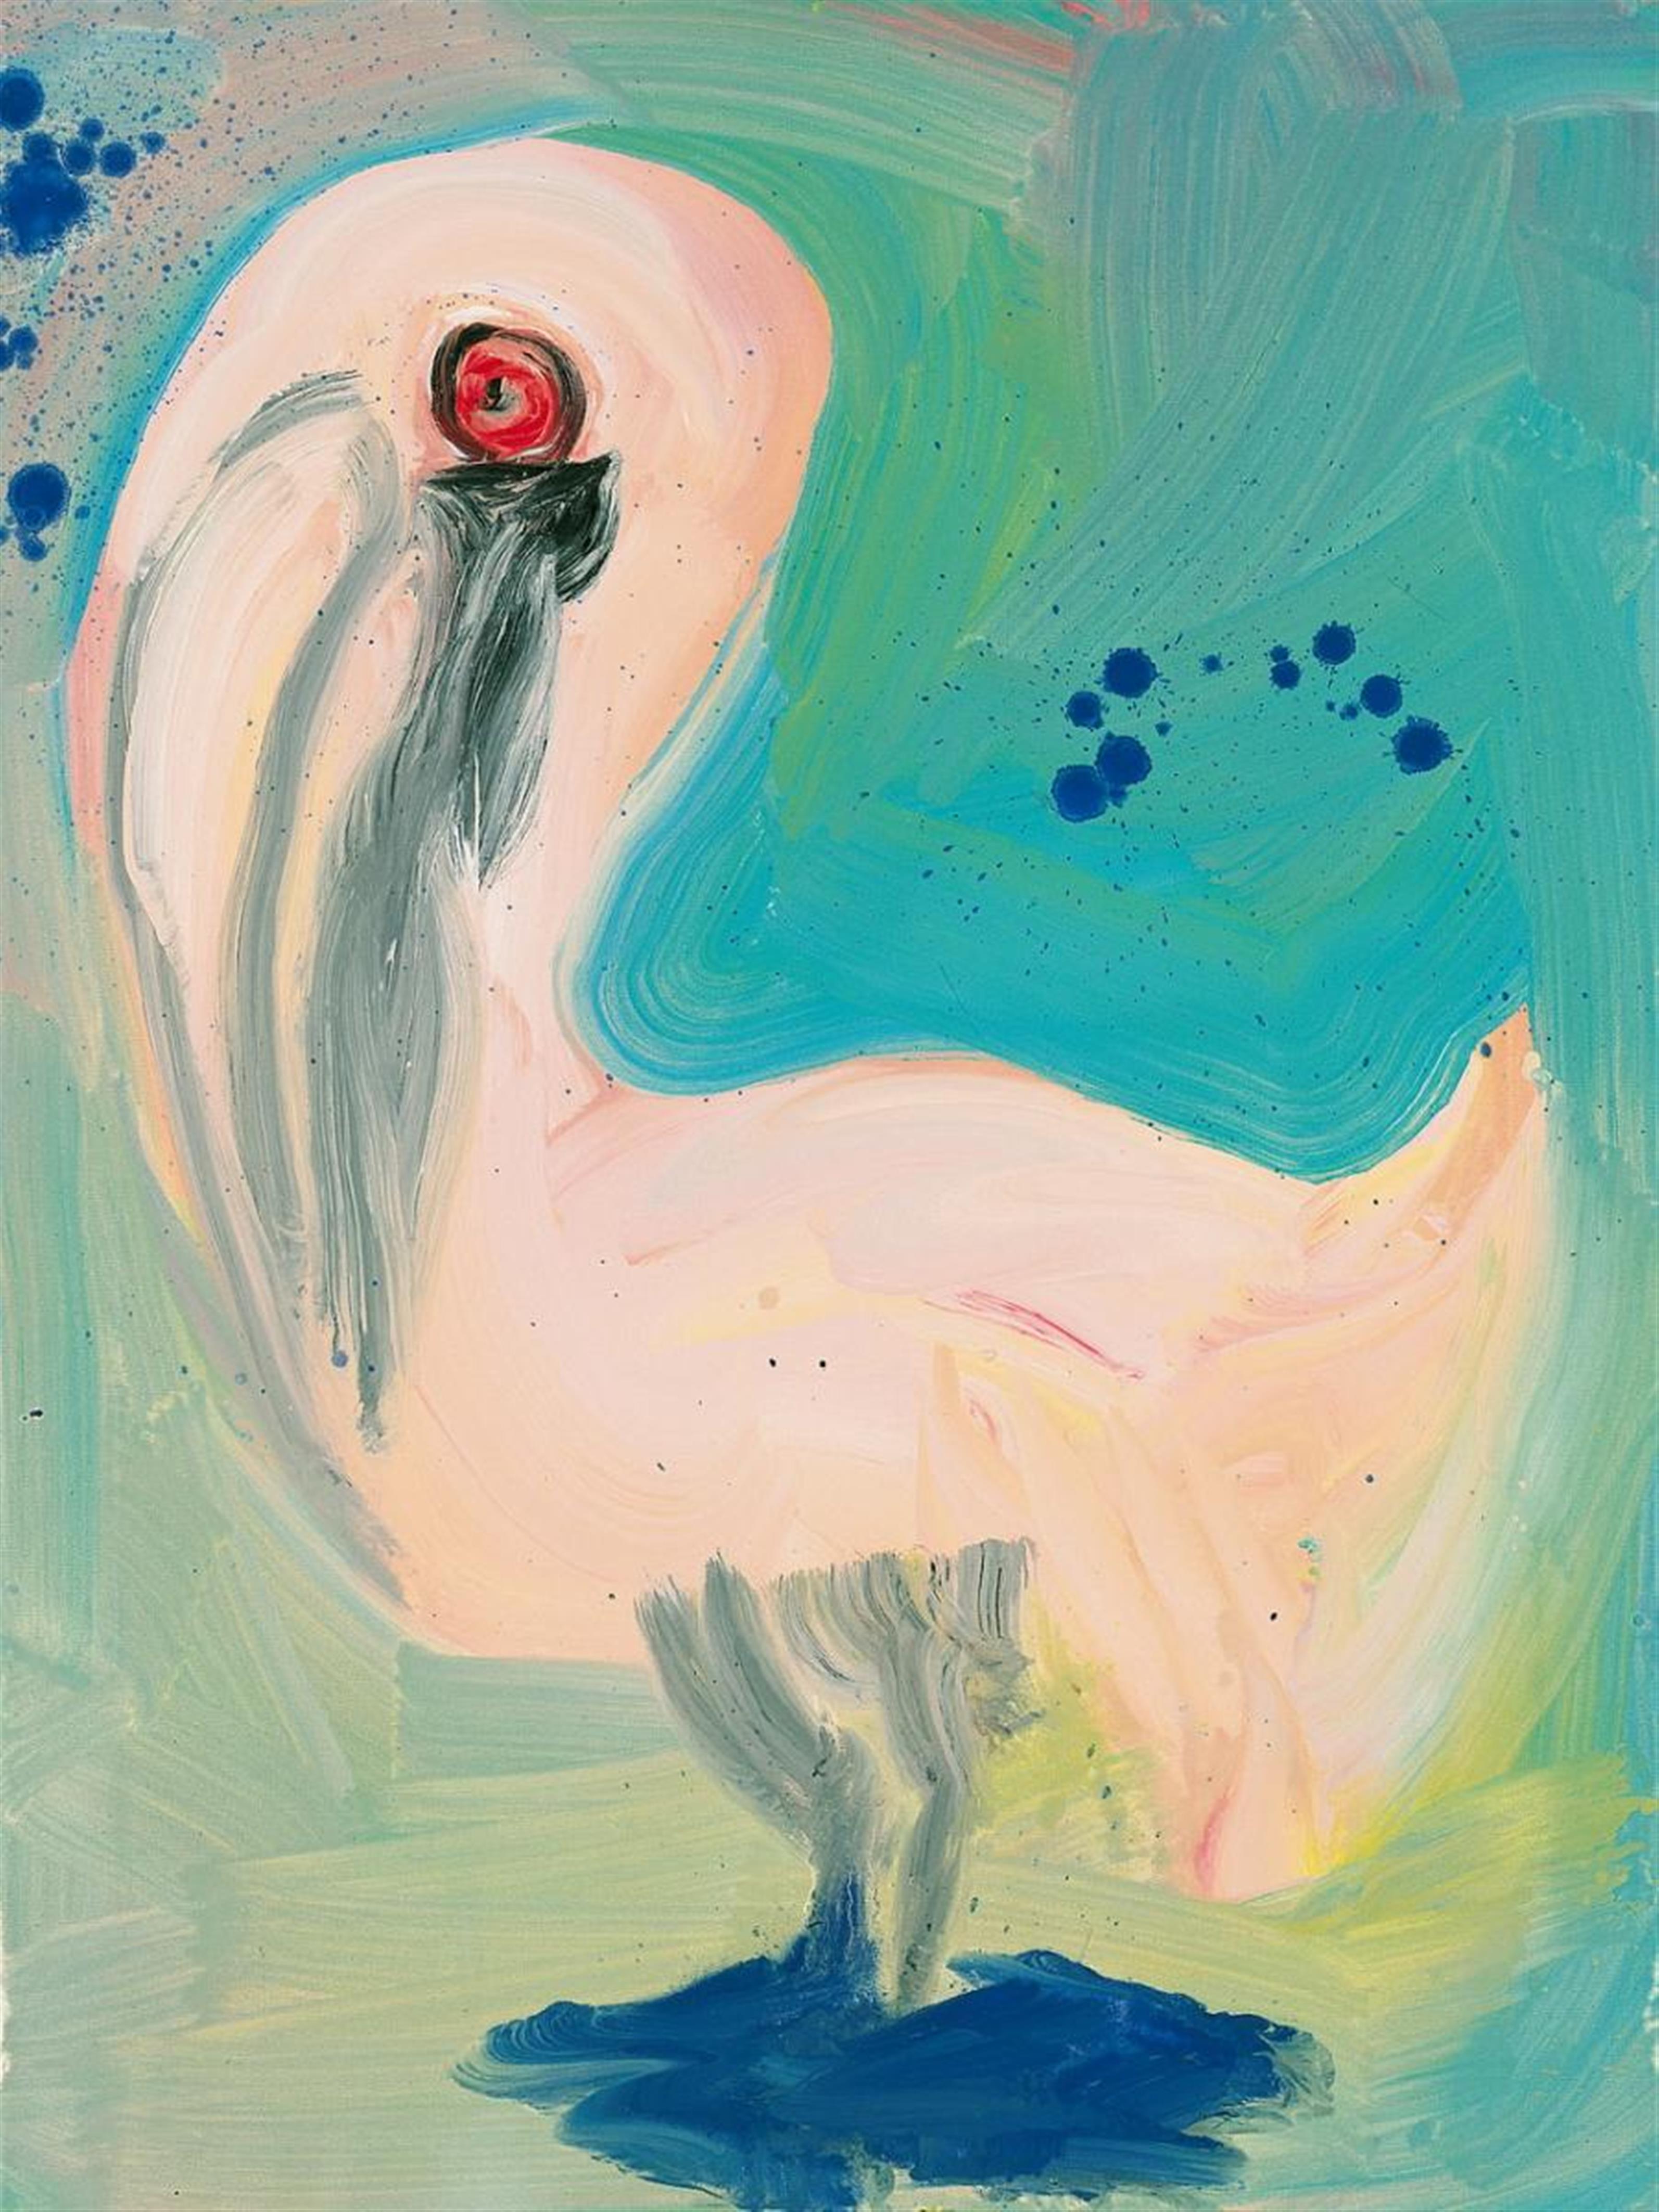 Rainer Fetting - White Pelican - image-1